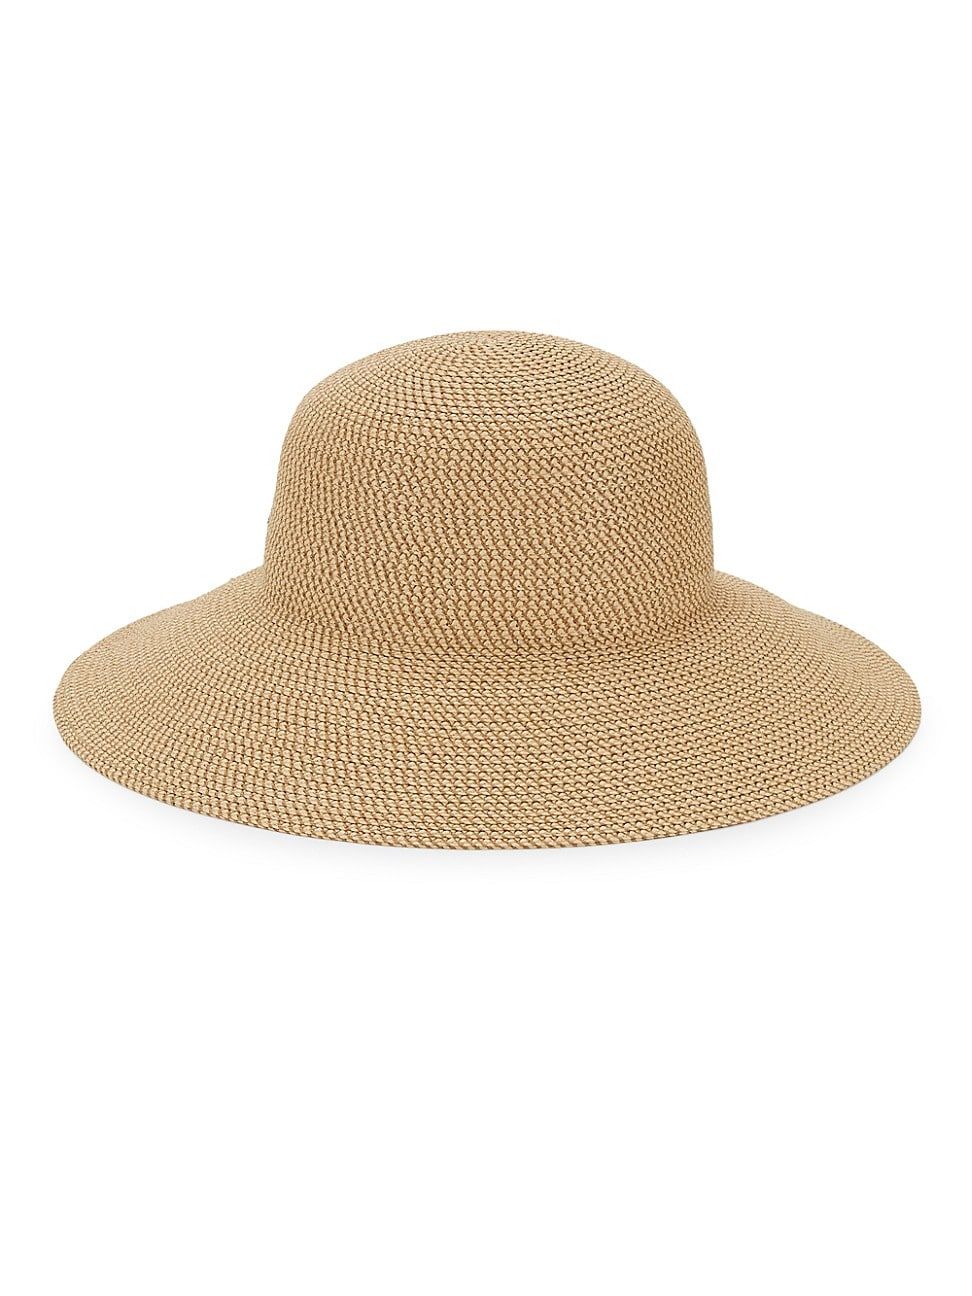 Eric Javits Women's Hampton Sun Hat - Peanut | Saks Fifth Avenue